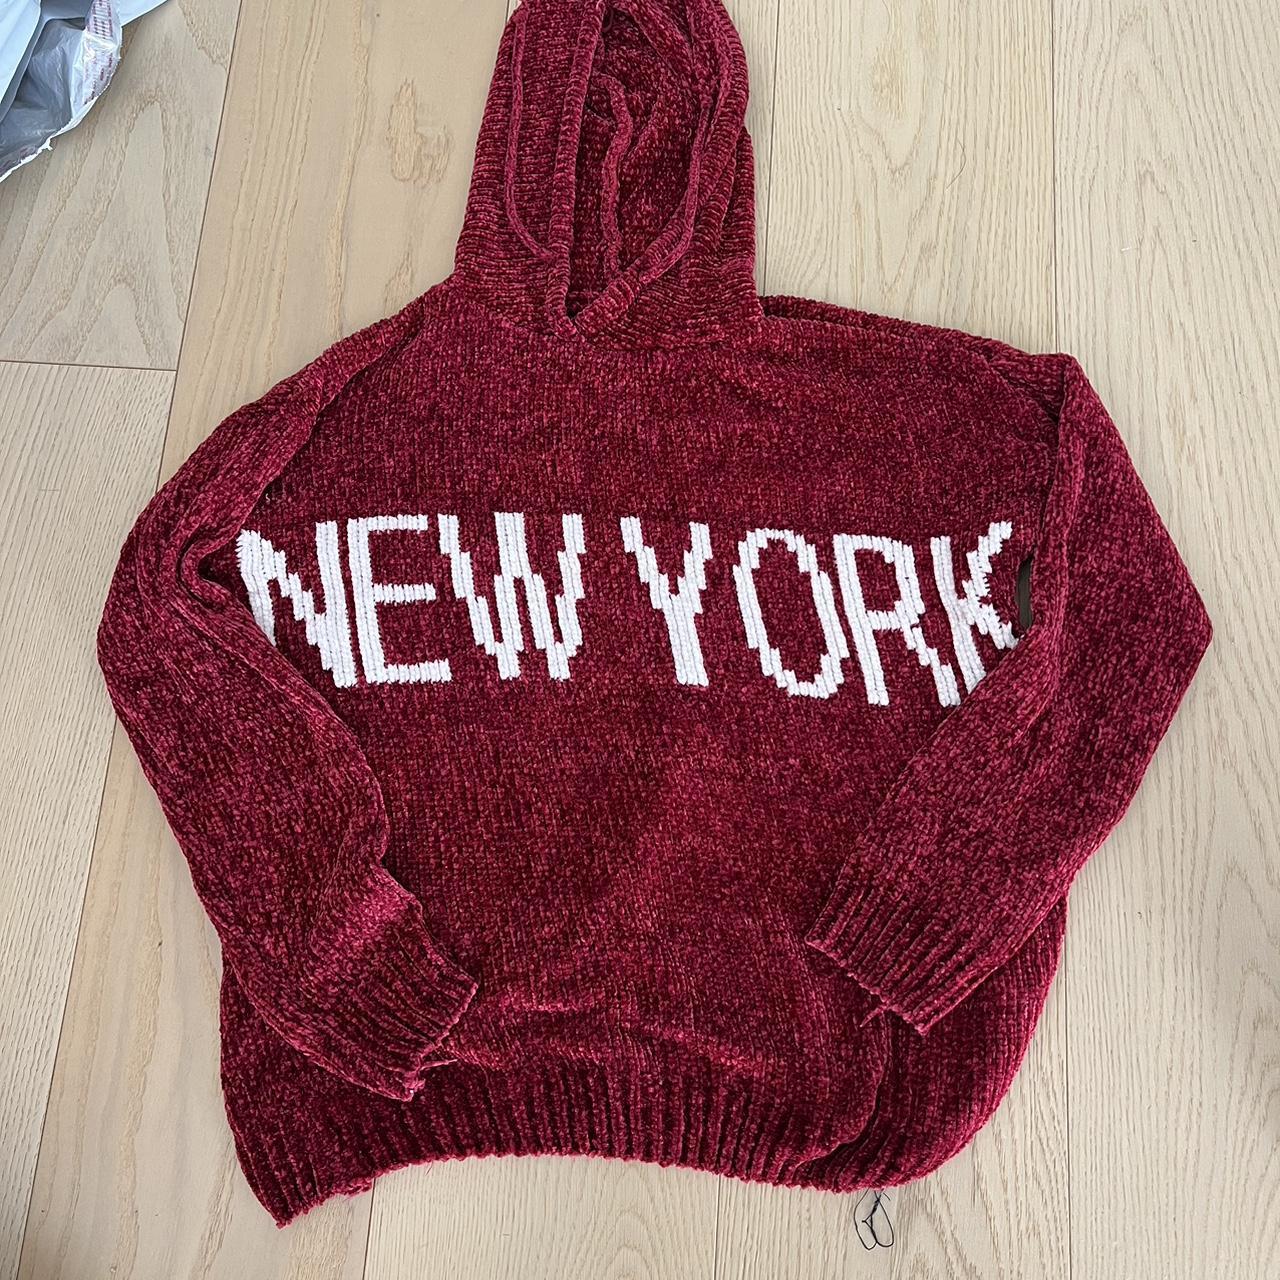 New York Hoodie - Red